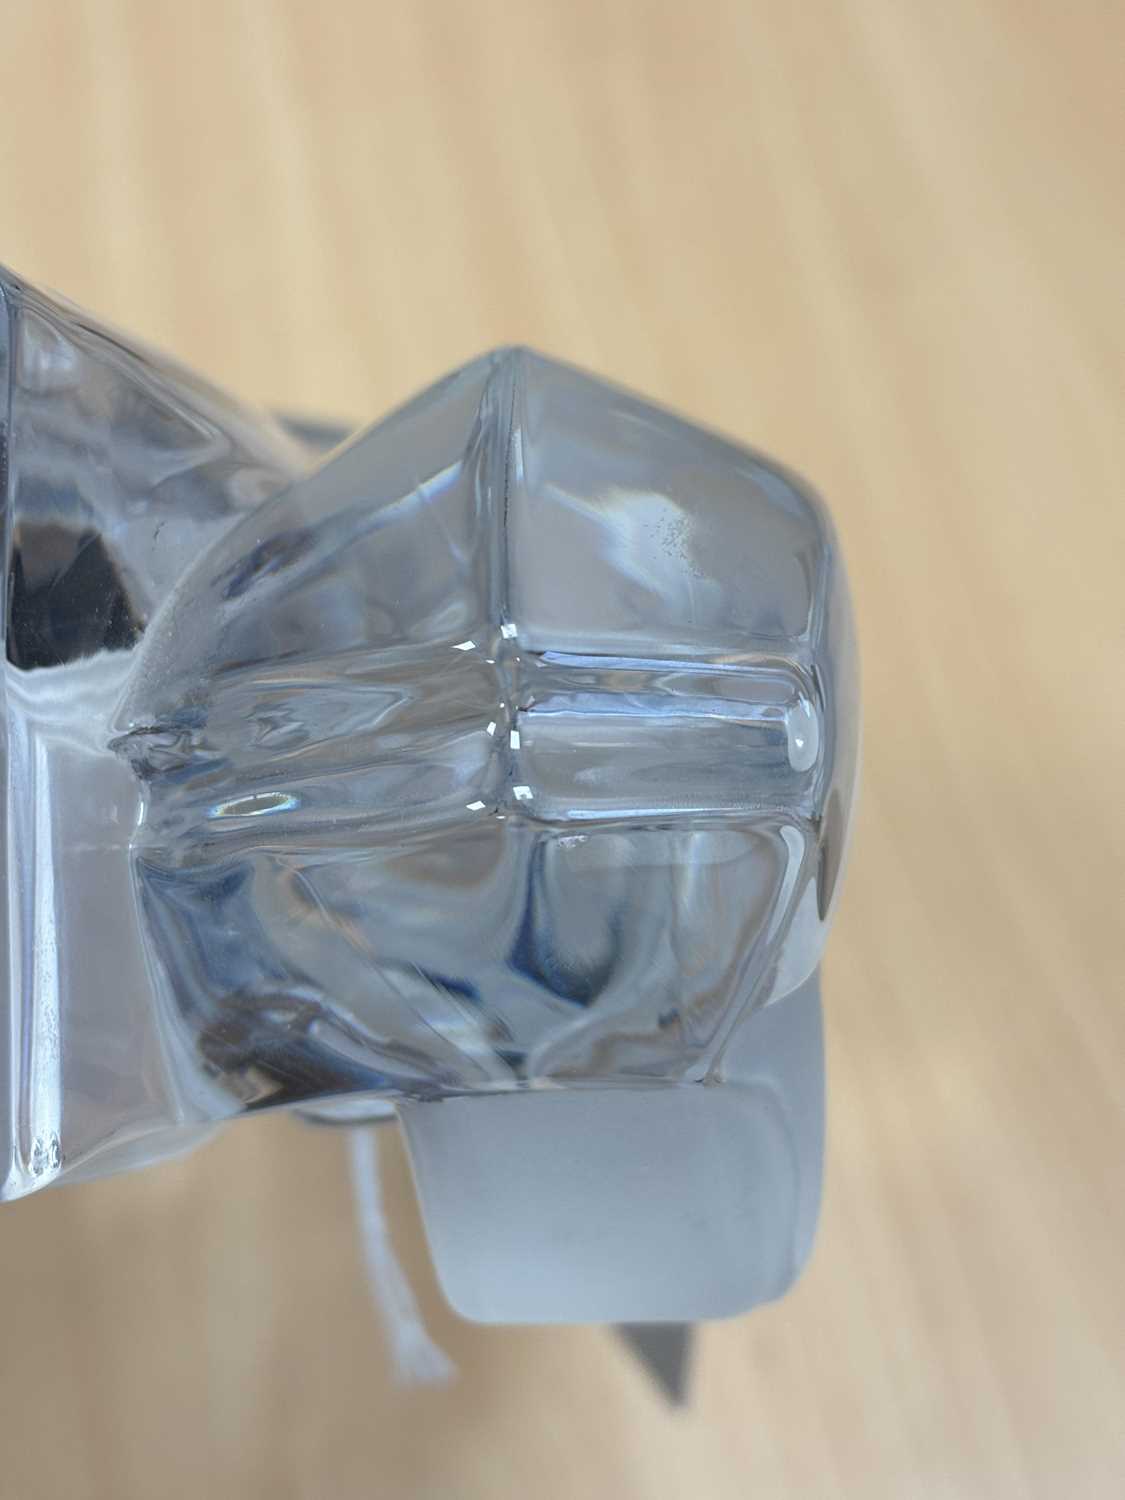 A DAUM CRYSTAL GLASS 'BUGATTI COUPÉ RIVIERA' DESK-PIECE, DESIGNED BY XAVIER FROISSART - Image 4 of 4